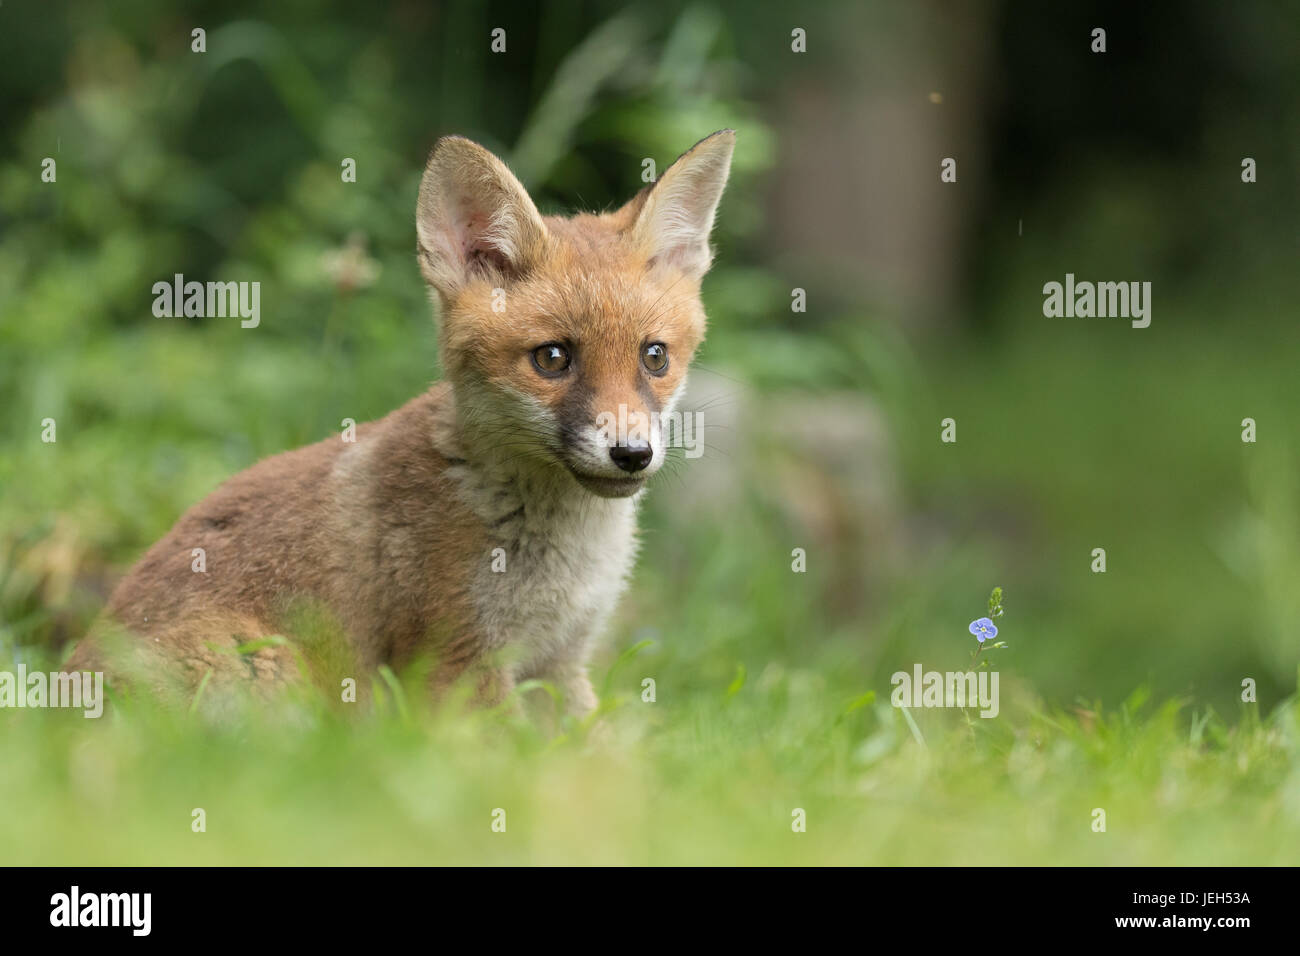 Young fox cub exploring its new surroundings Stock Photo